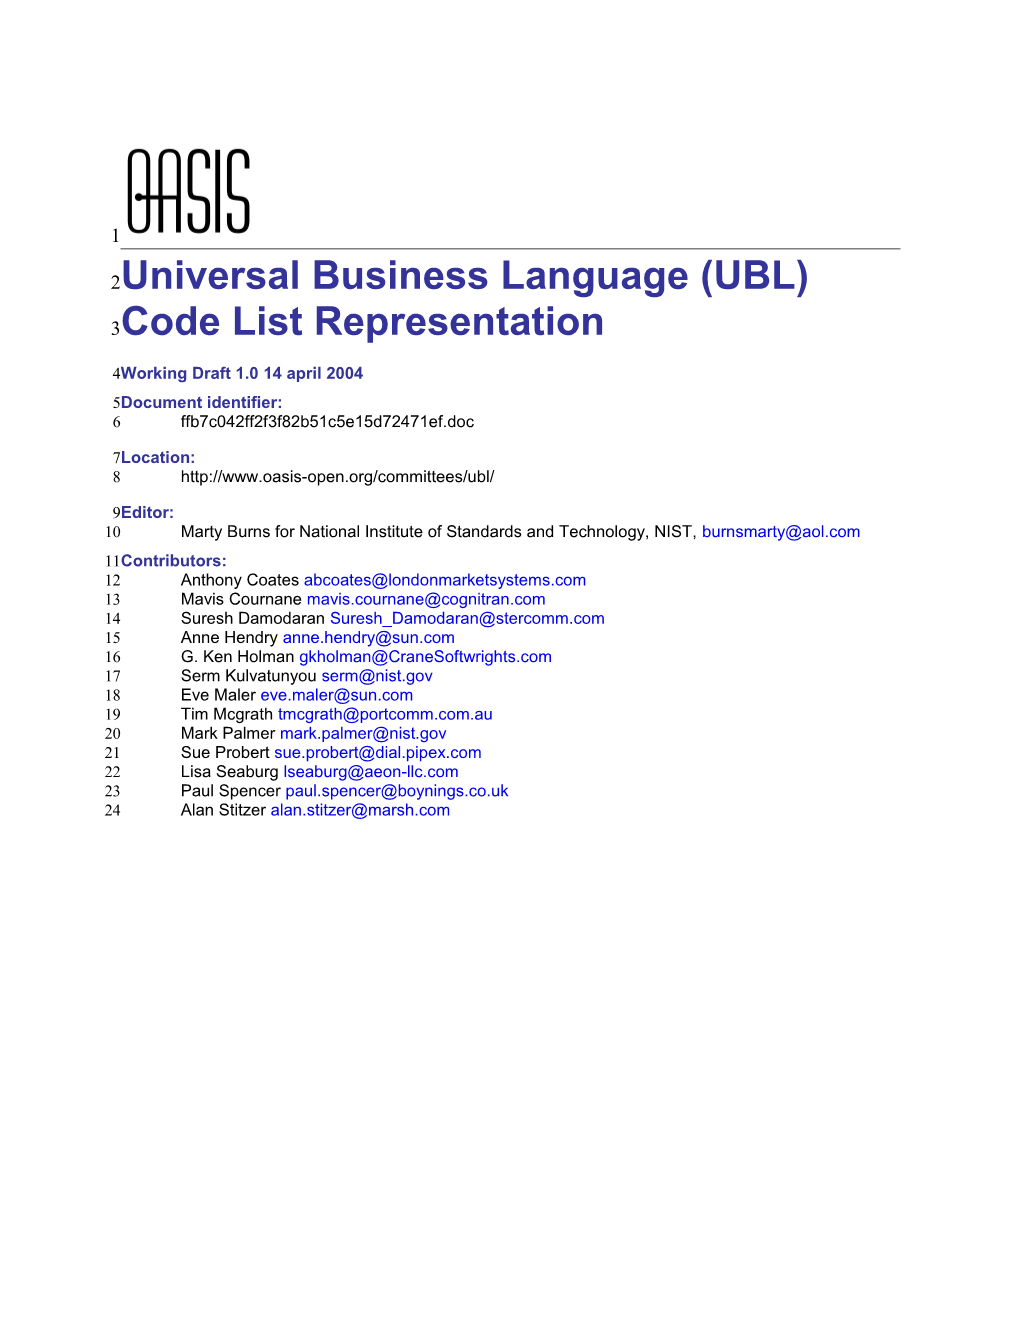 Universal Business Language (UBL) Code List Representation